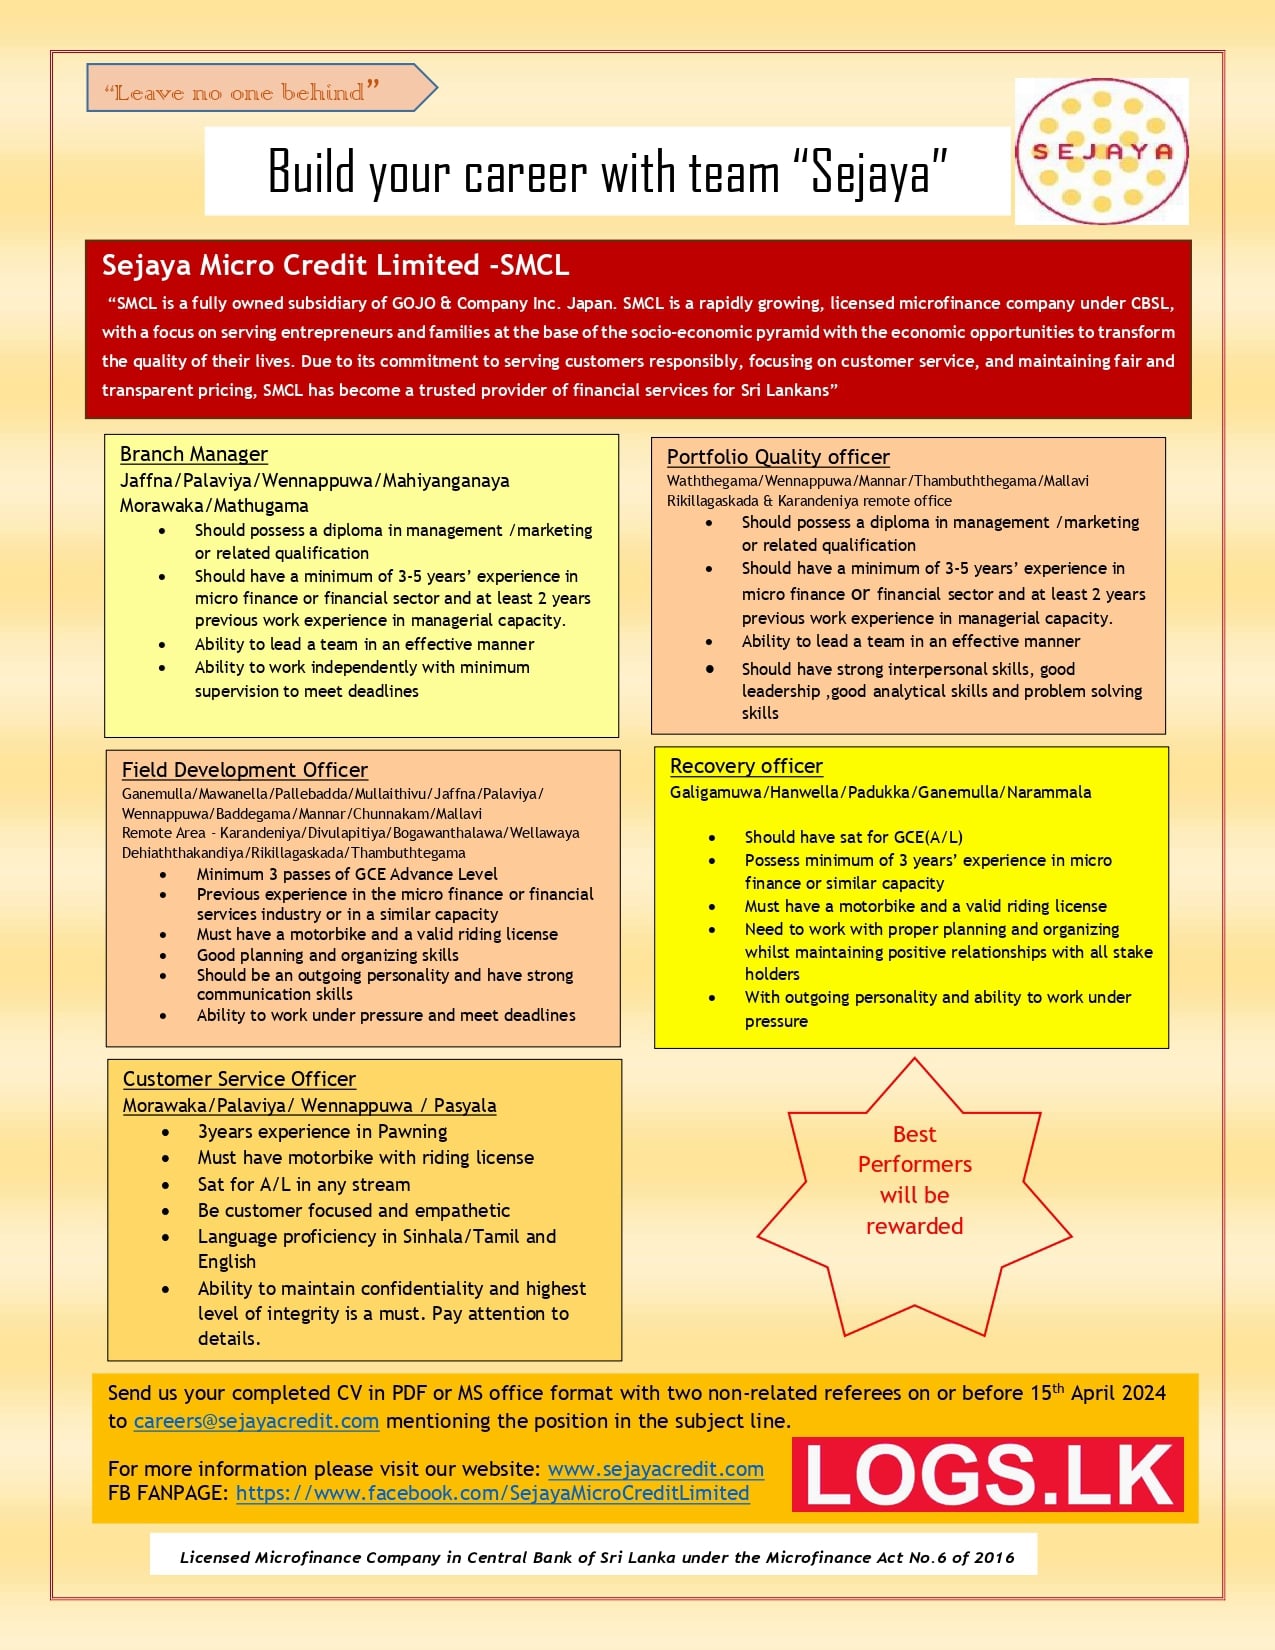 Sejaya Micro Credit Job Vacancies 2024 in Sri Lanka Application Form, Details Download